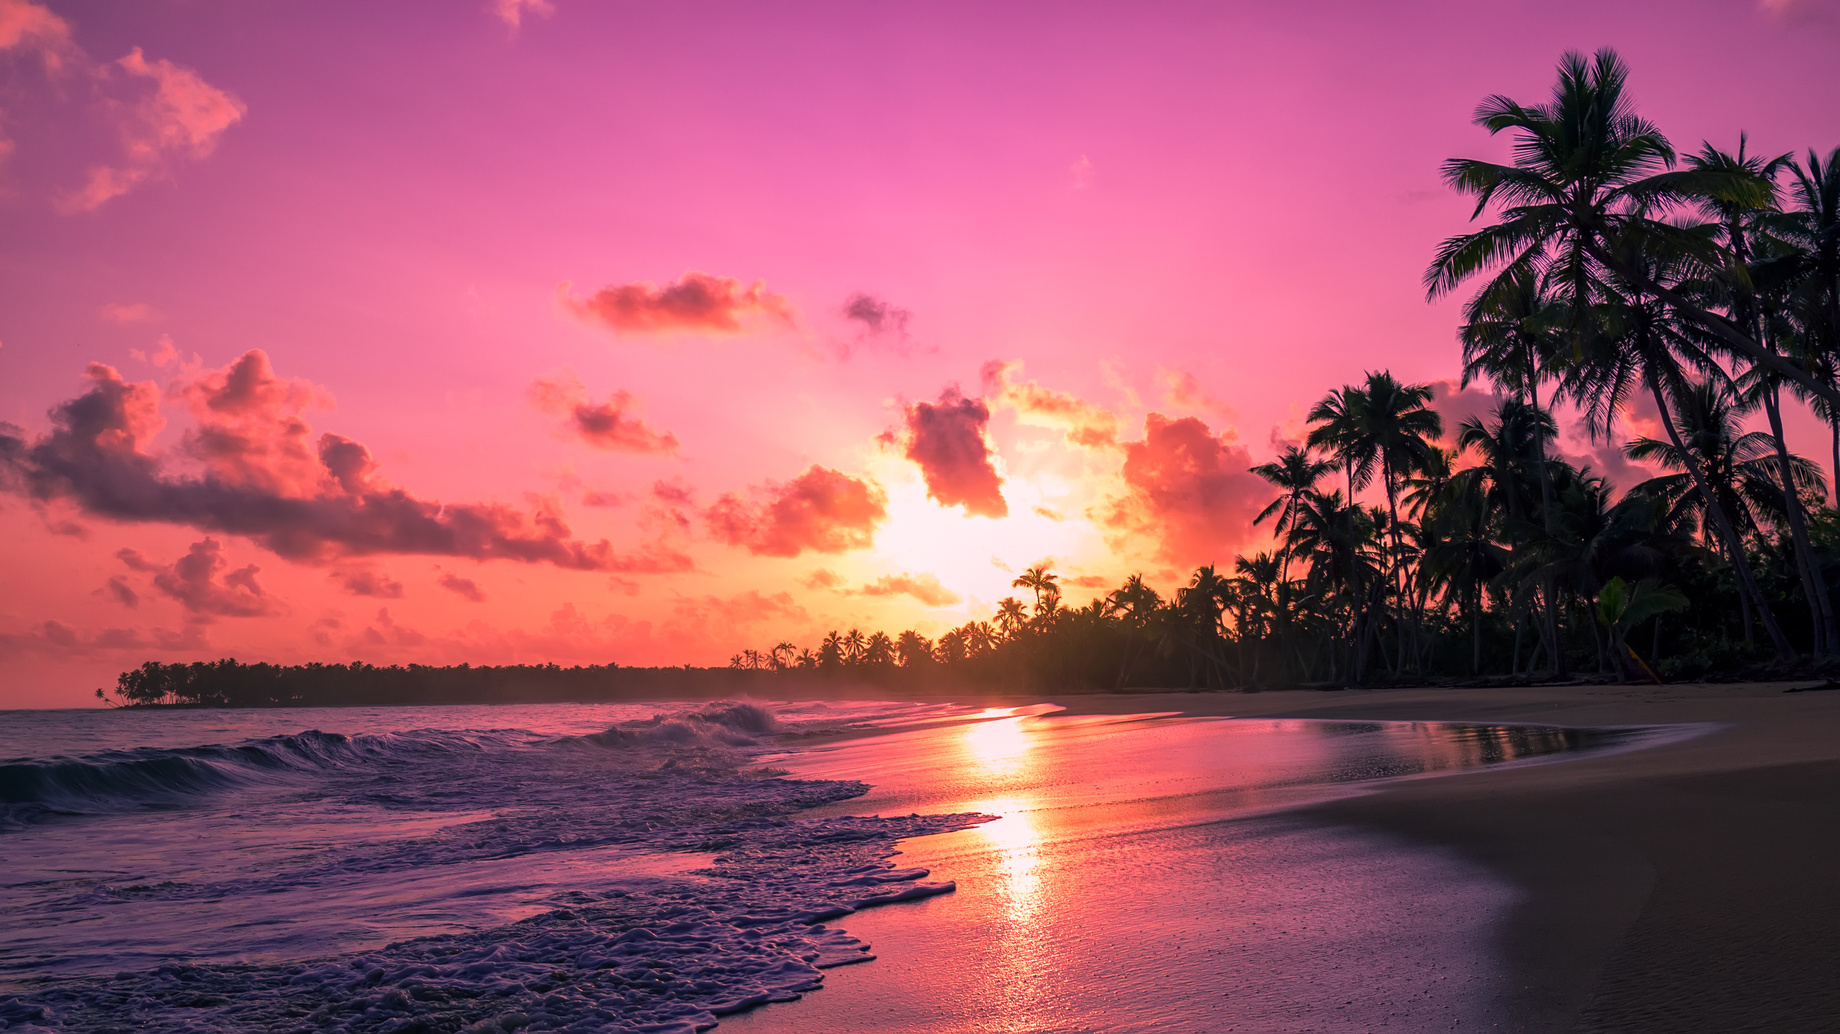 Pink sunrise on a tropical beach.